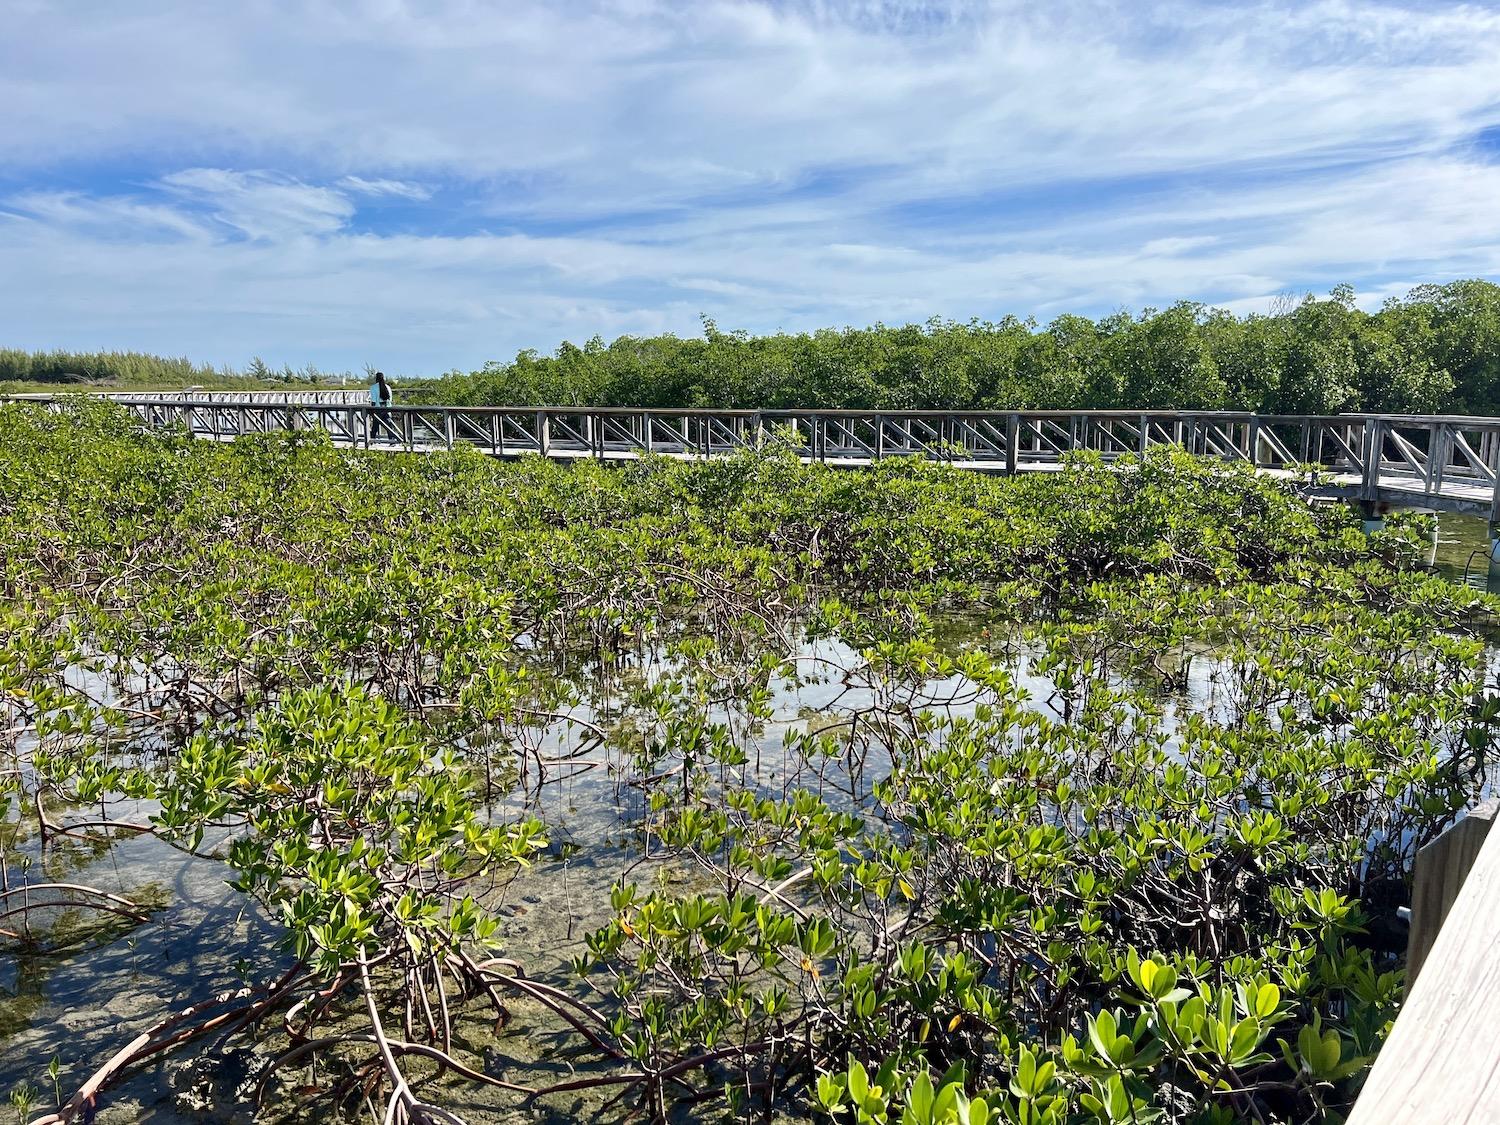 A short boardwalk lets visitors explore Bonefish Pond National Park's mangroves and tidal creek.